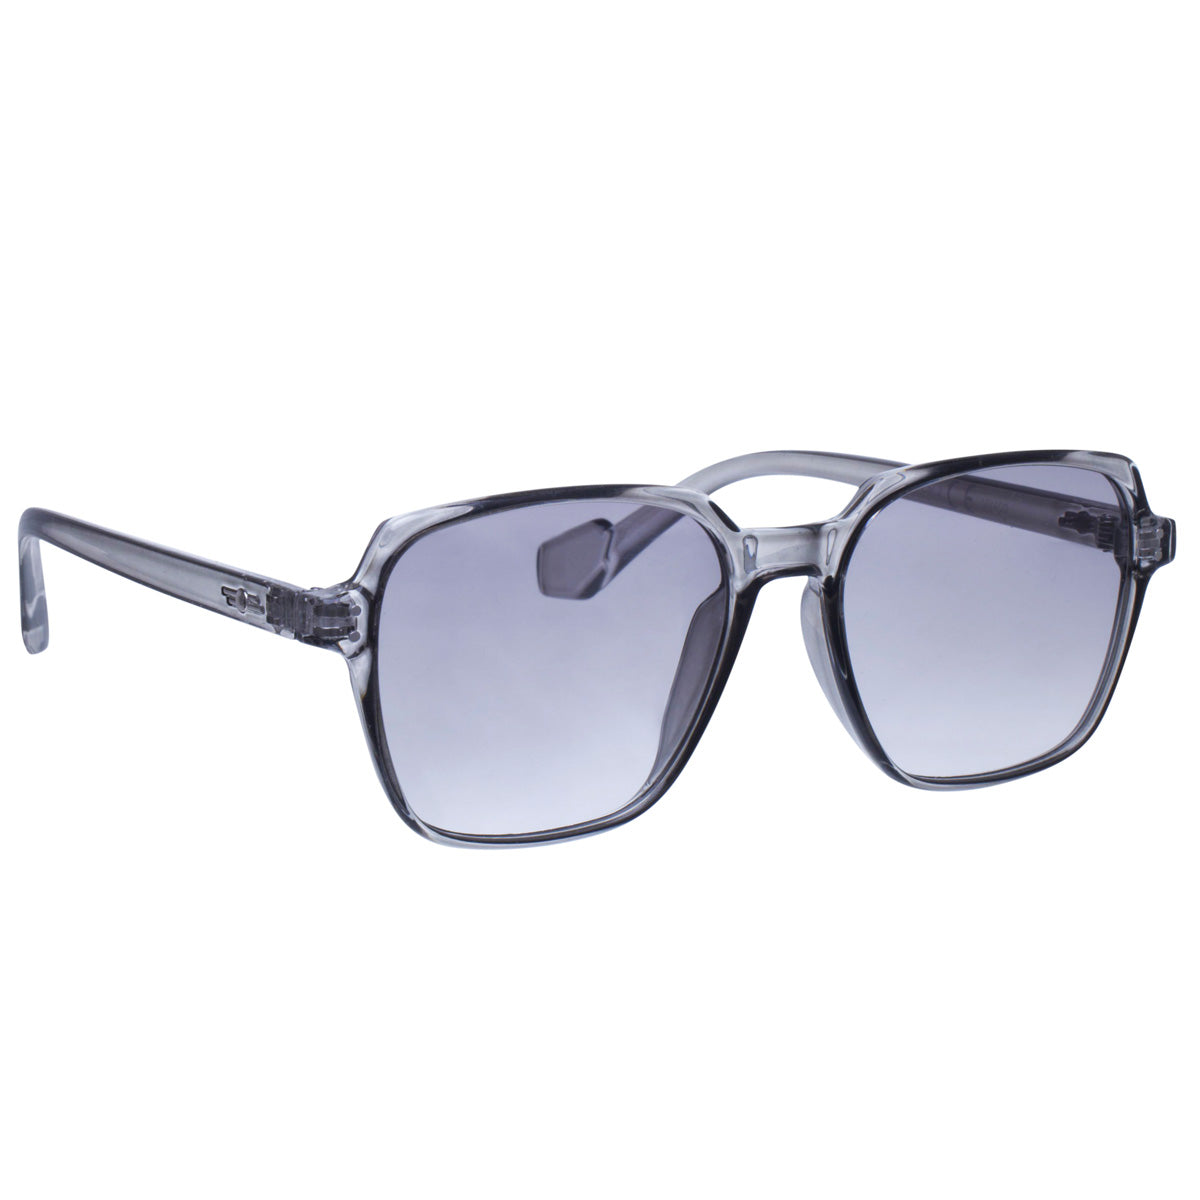 Angular square sunglasses